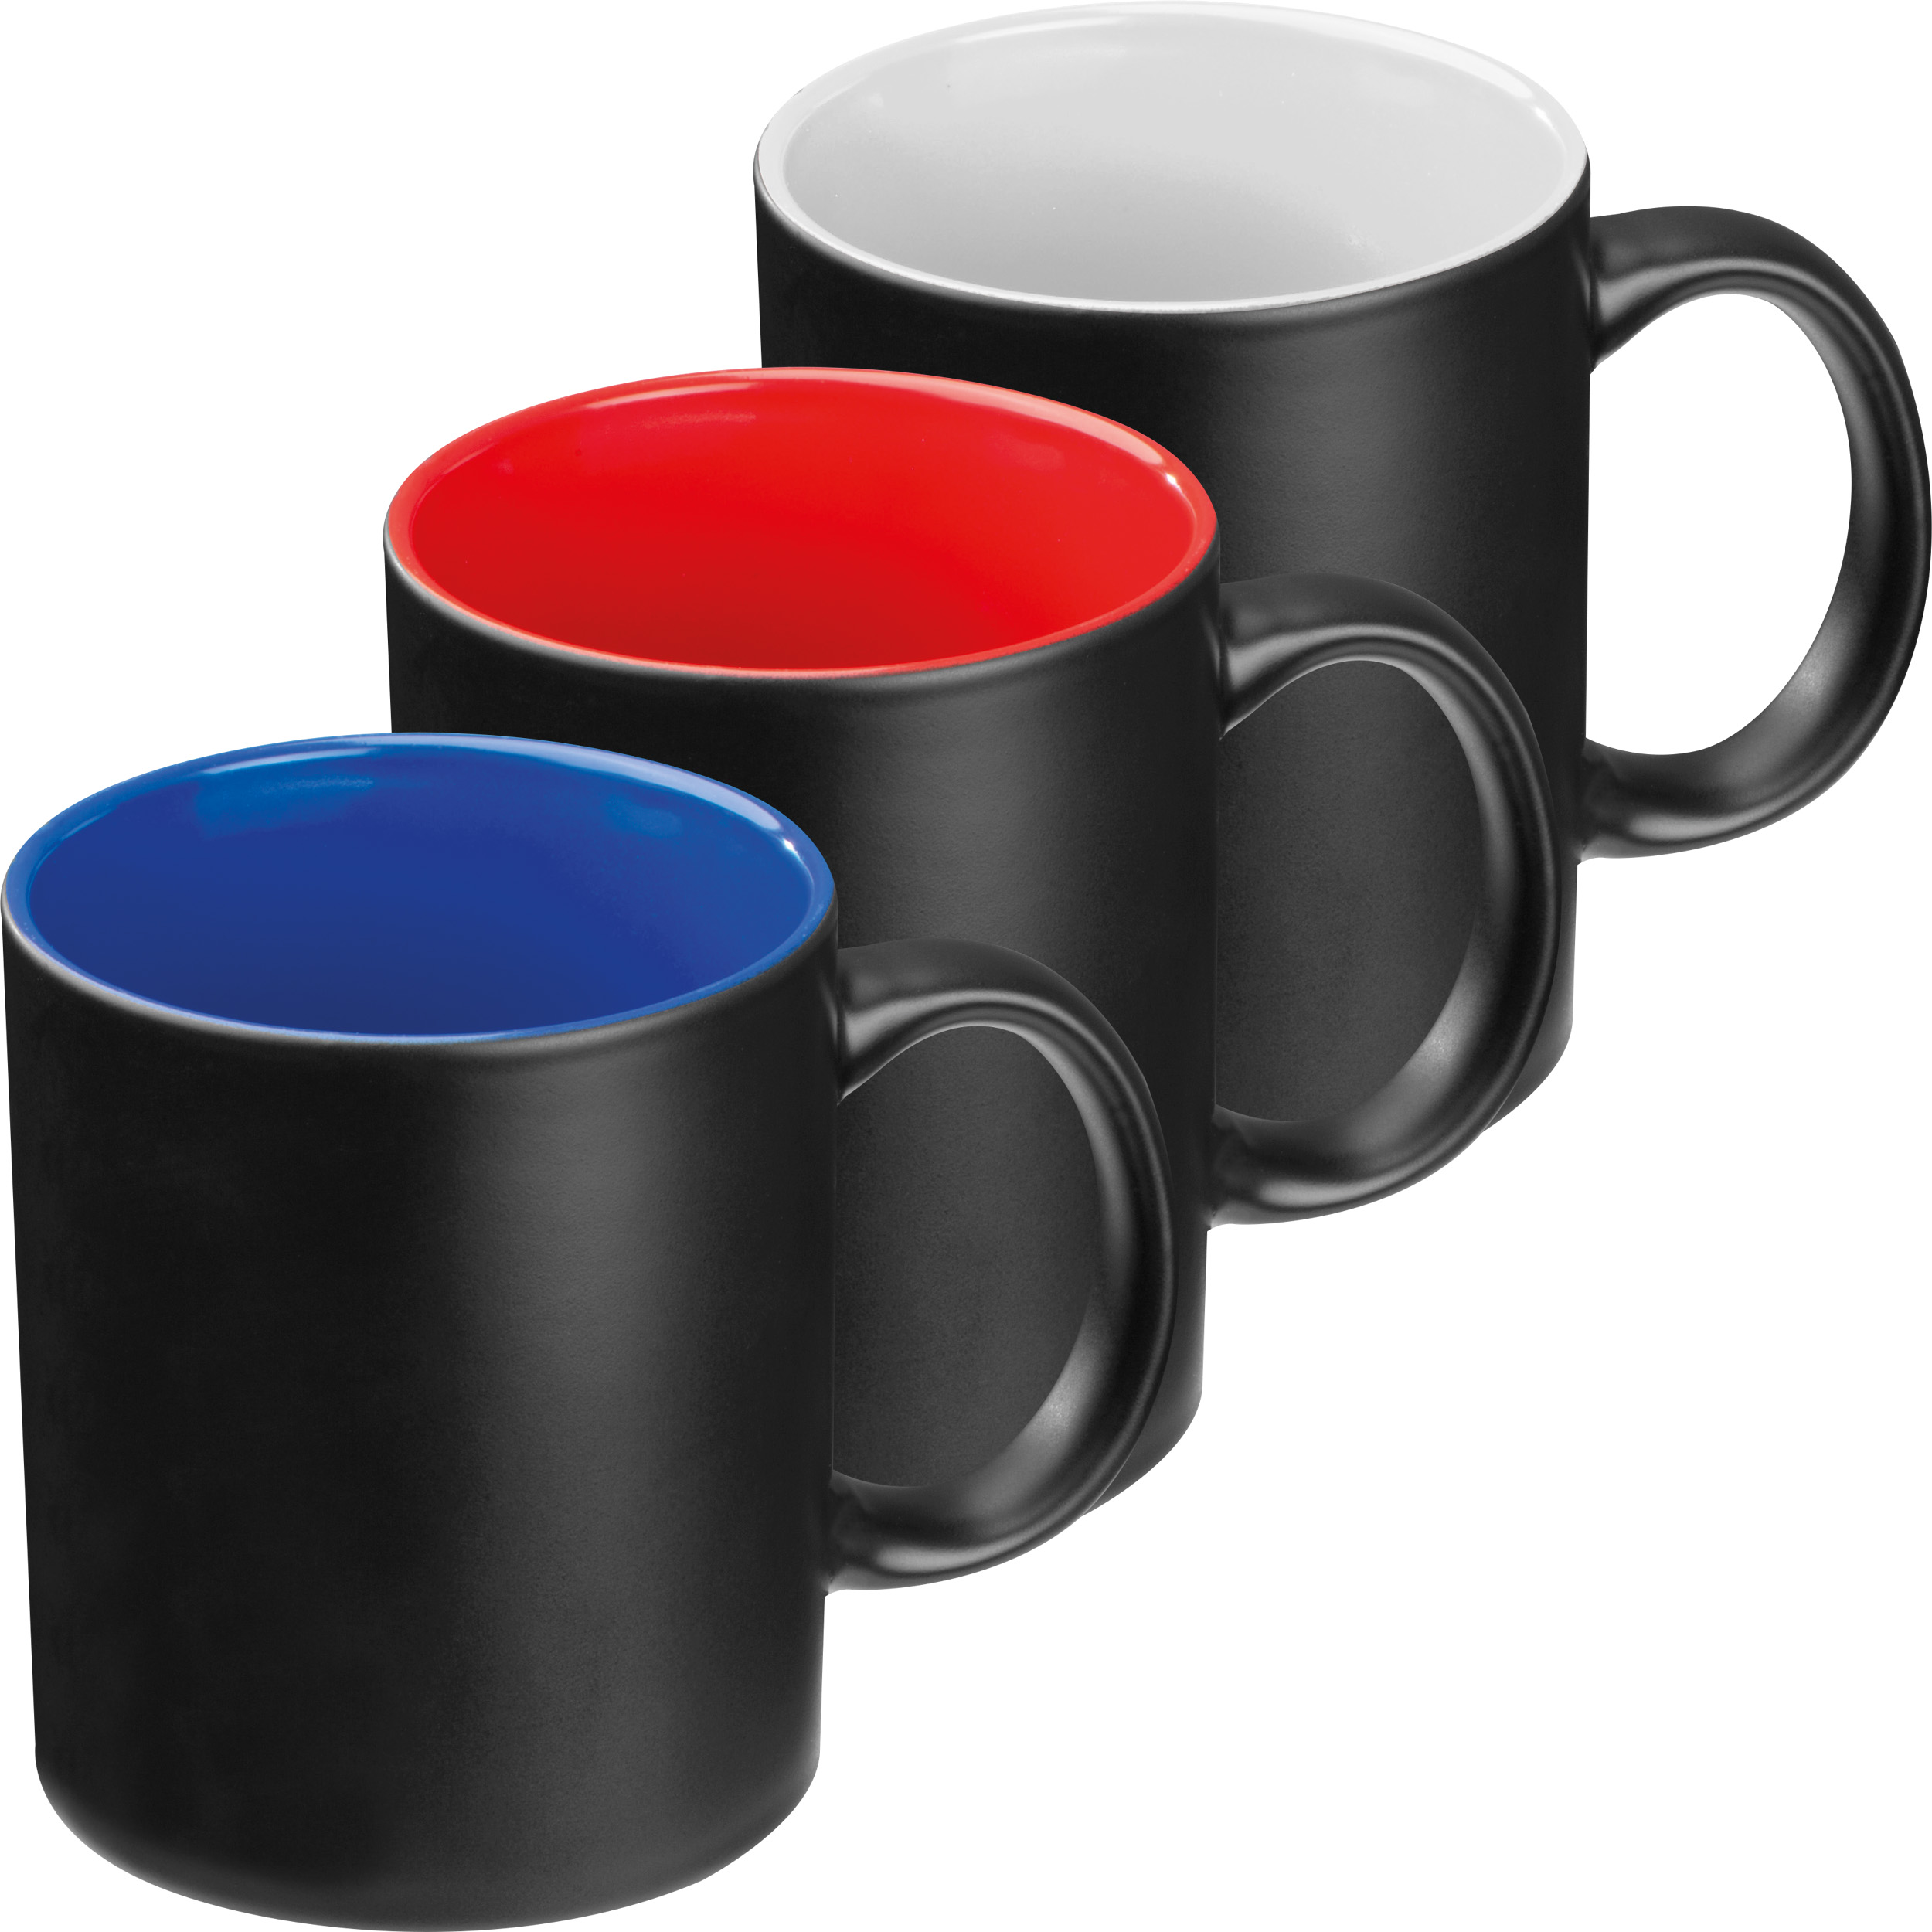 Black mug with colored inside